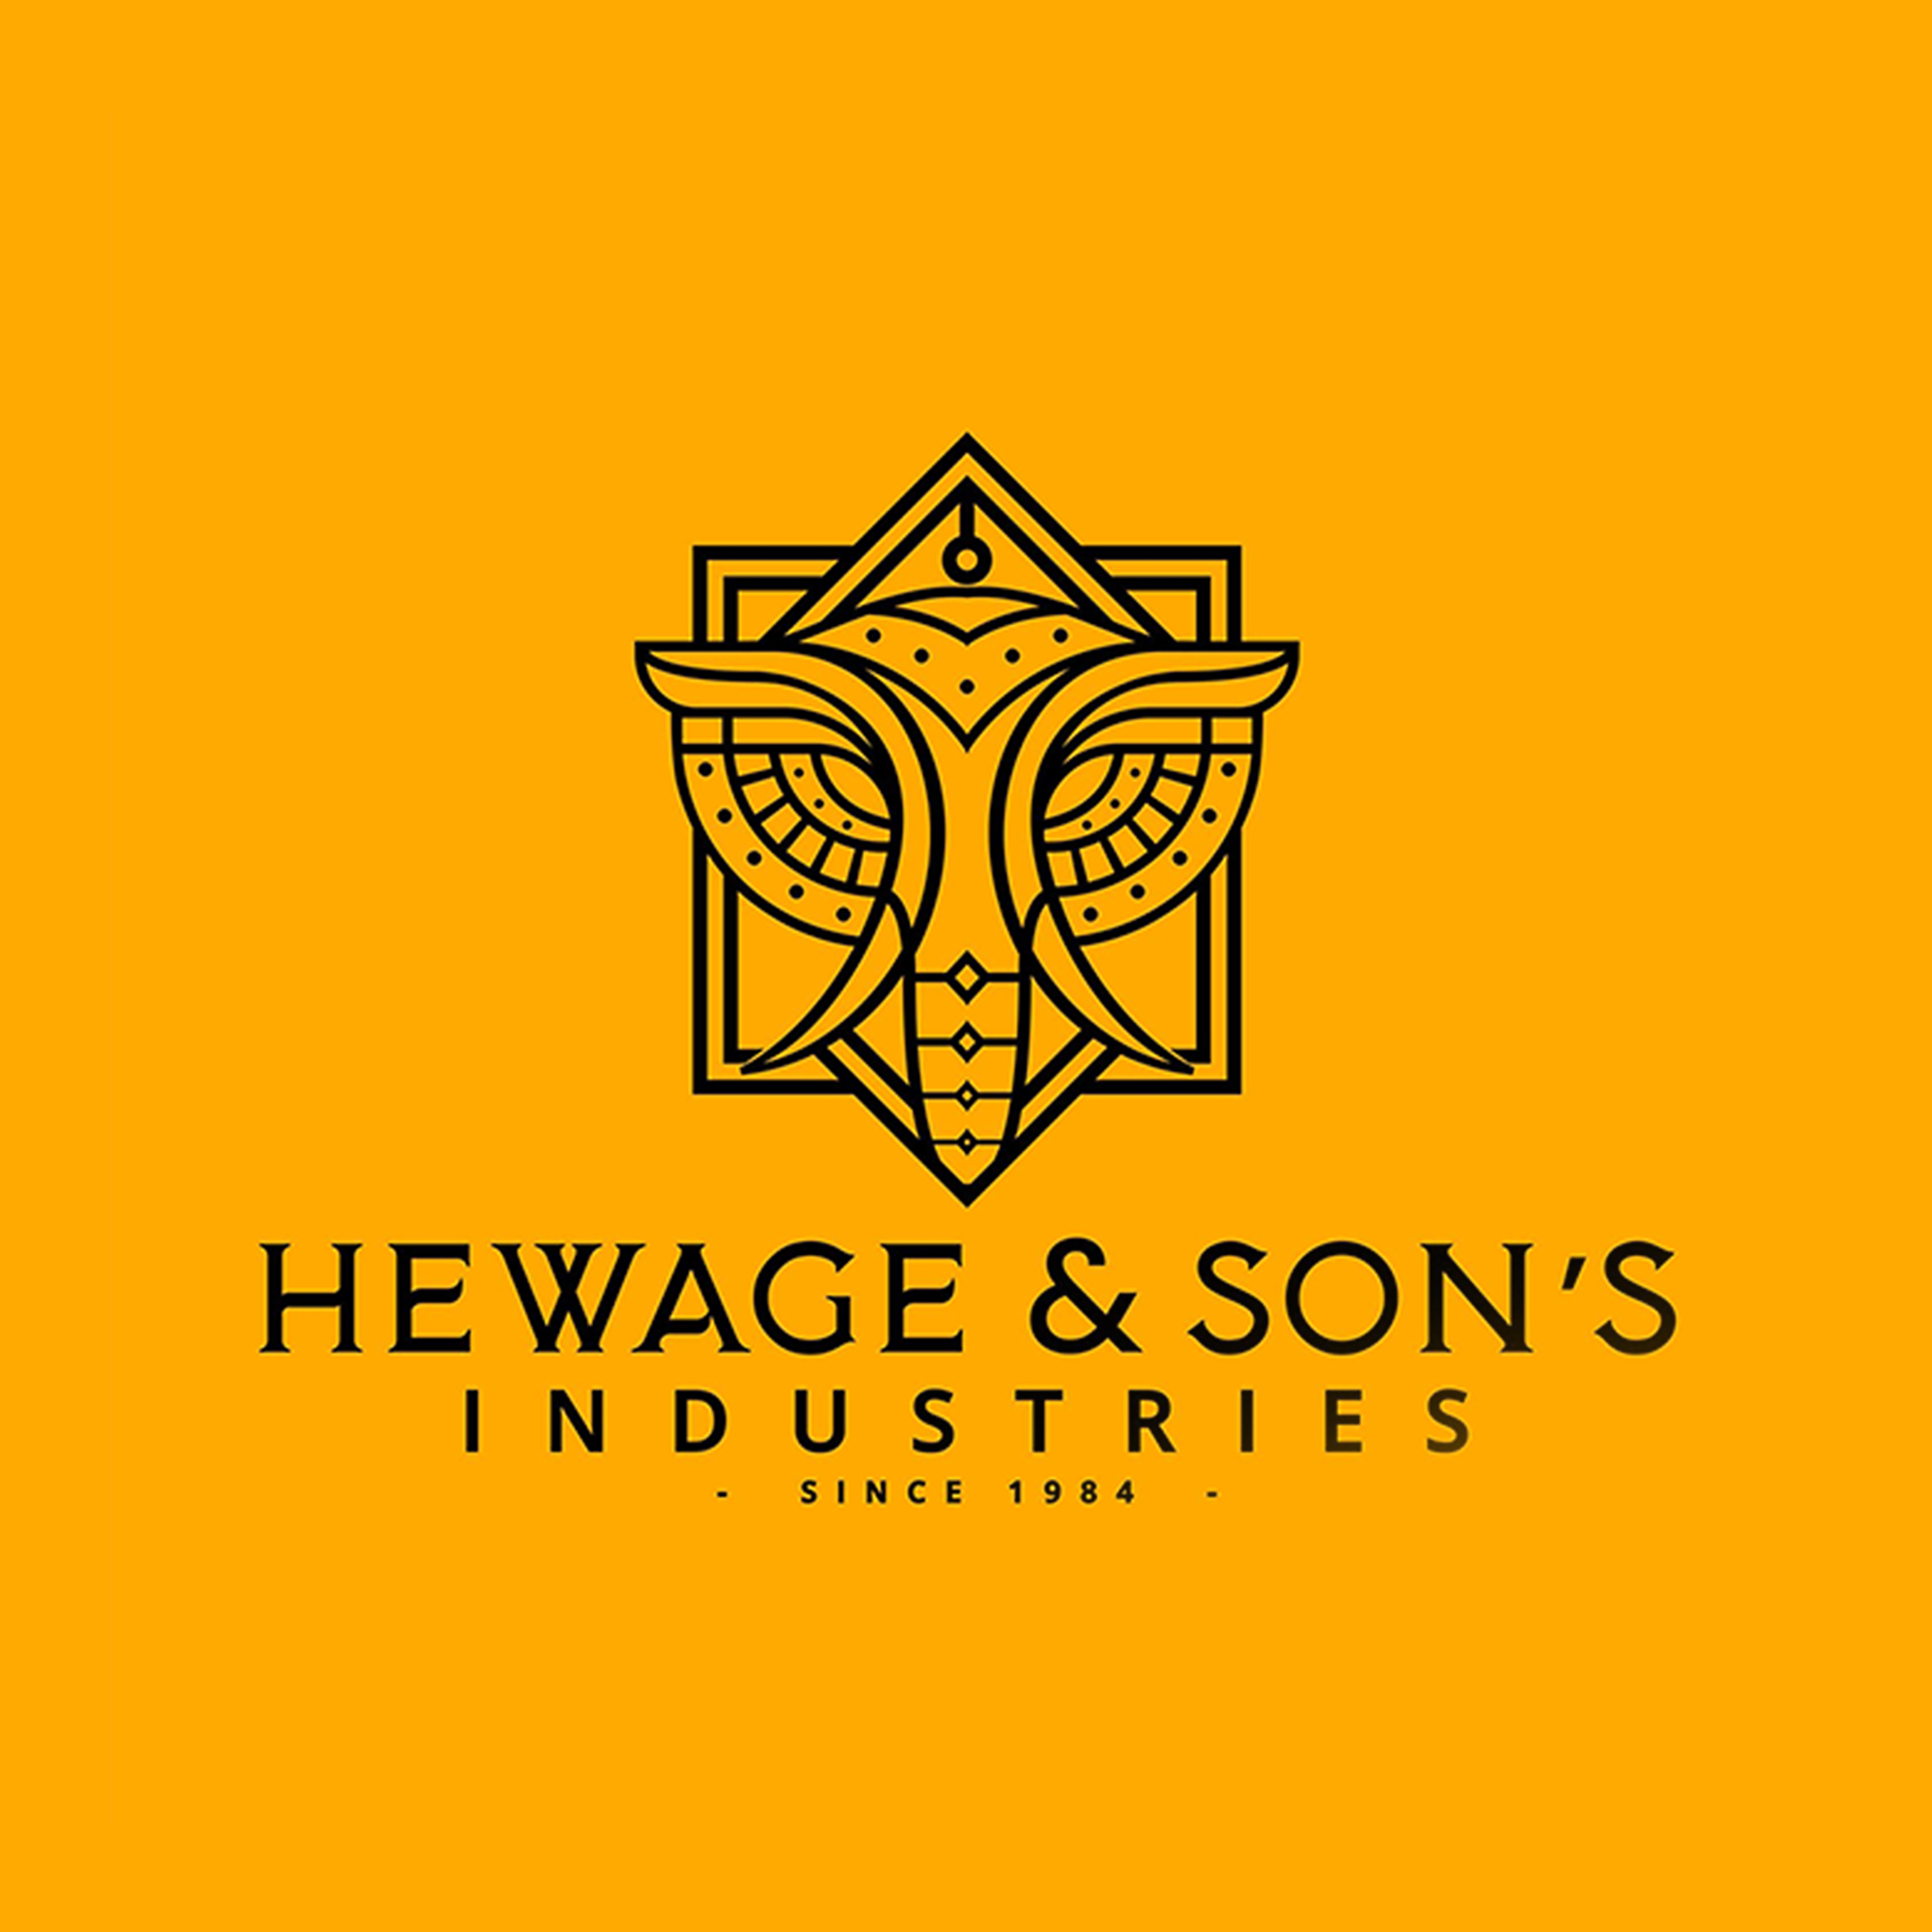 Hewage & Sons Industries (Pvt) Ltd